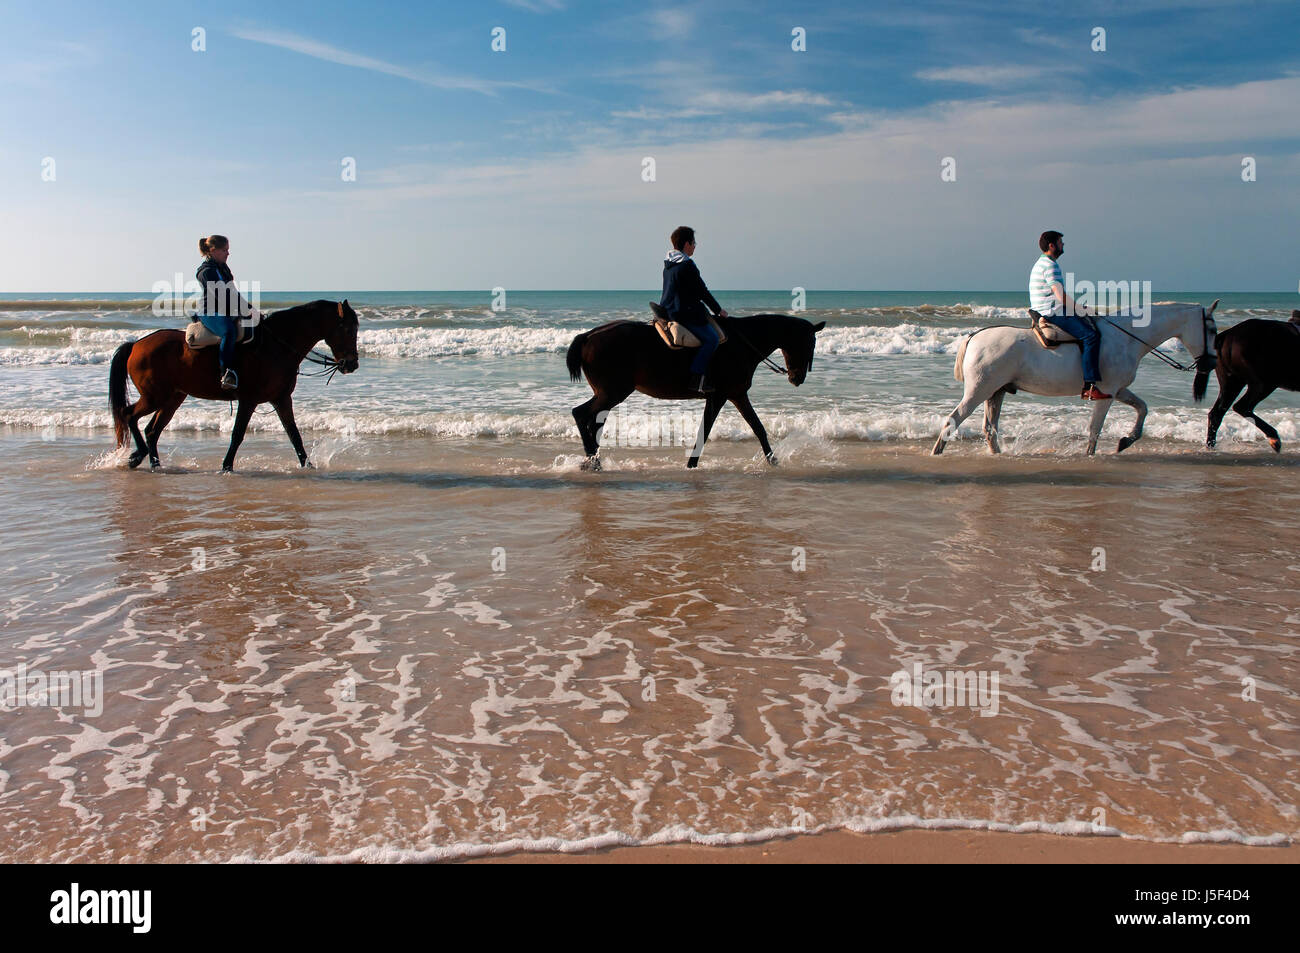 Equestrian tourism on the beach, Donana Natural Park, Matalascanas, Huelva province, Region of Andalusia, Spain, Europe Stock Photo